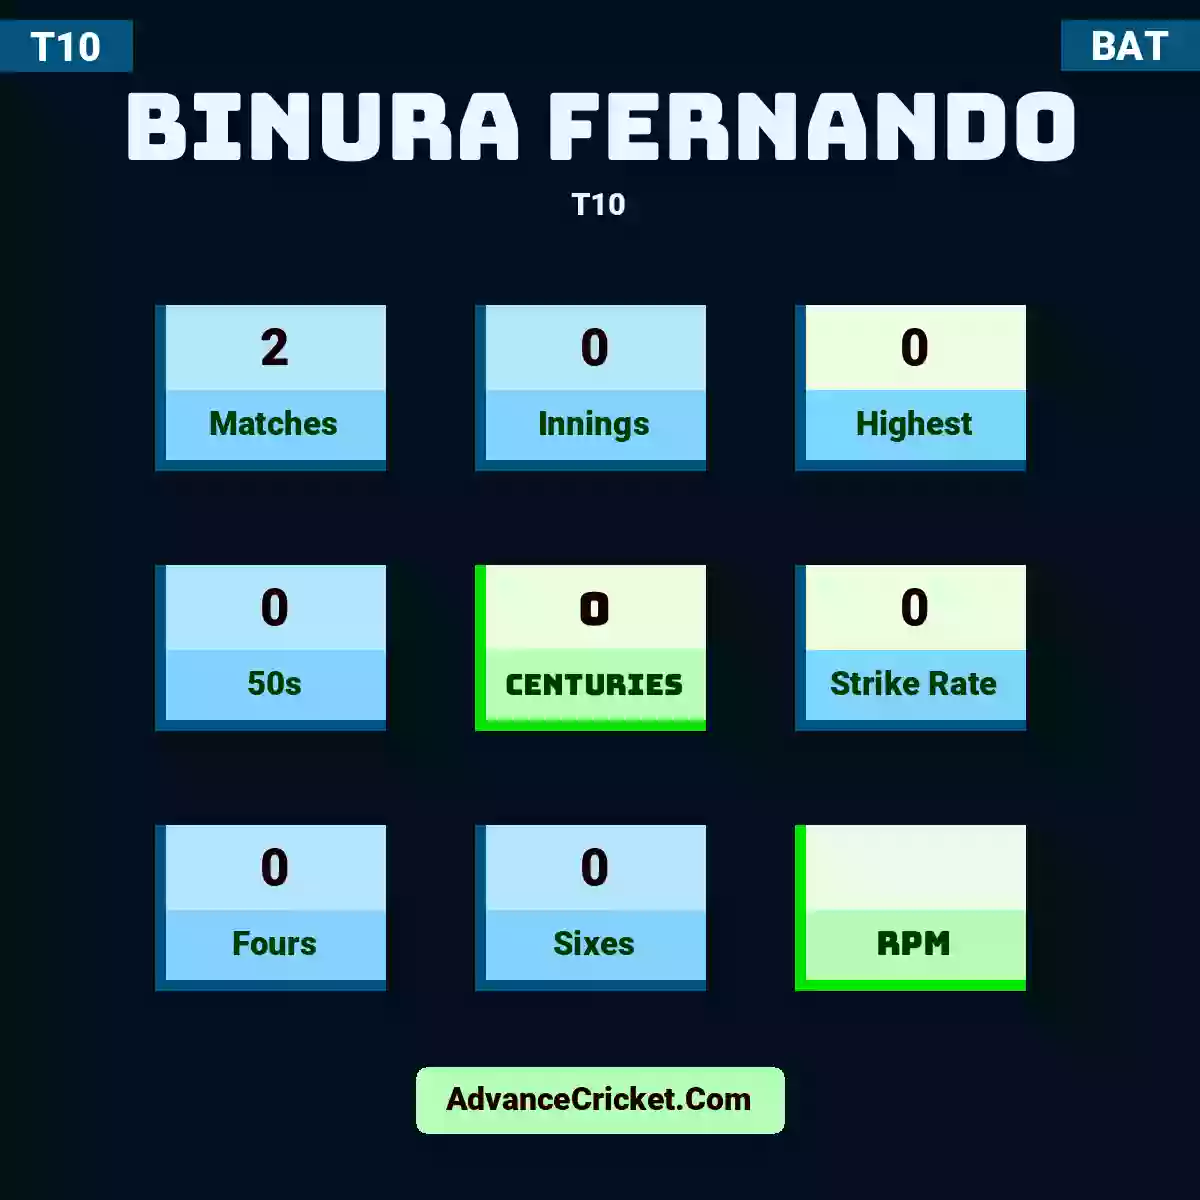 Binura Fernando T10 , Binura Fernando played 2 matches, scored 0 runs as highest, 0 half-centuries, and 0 centuries, with a strike rate of 0. B.Fernando hit 0 fours and 0 sixes.